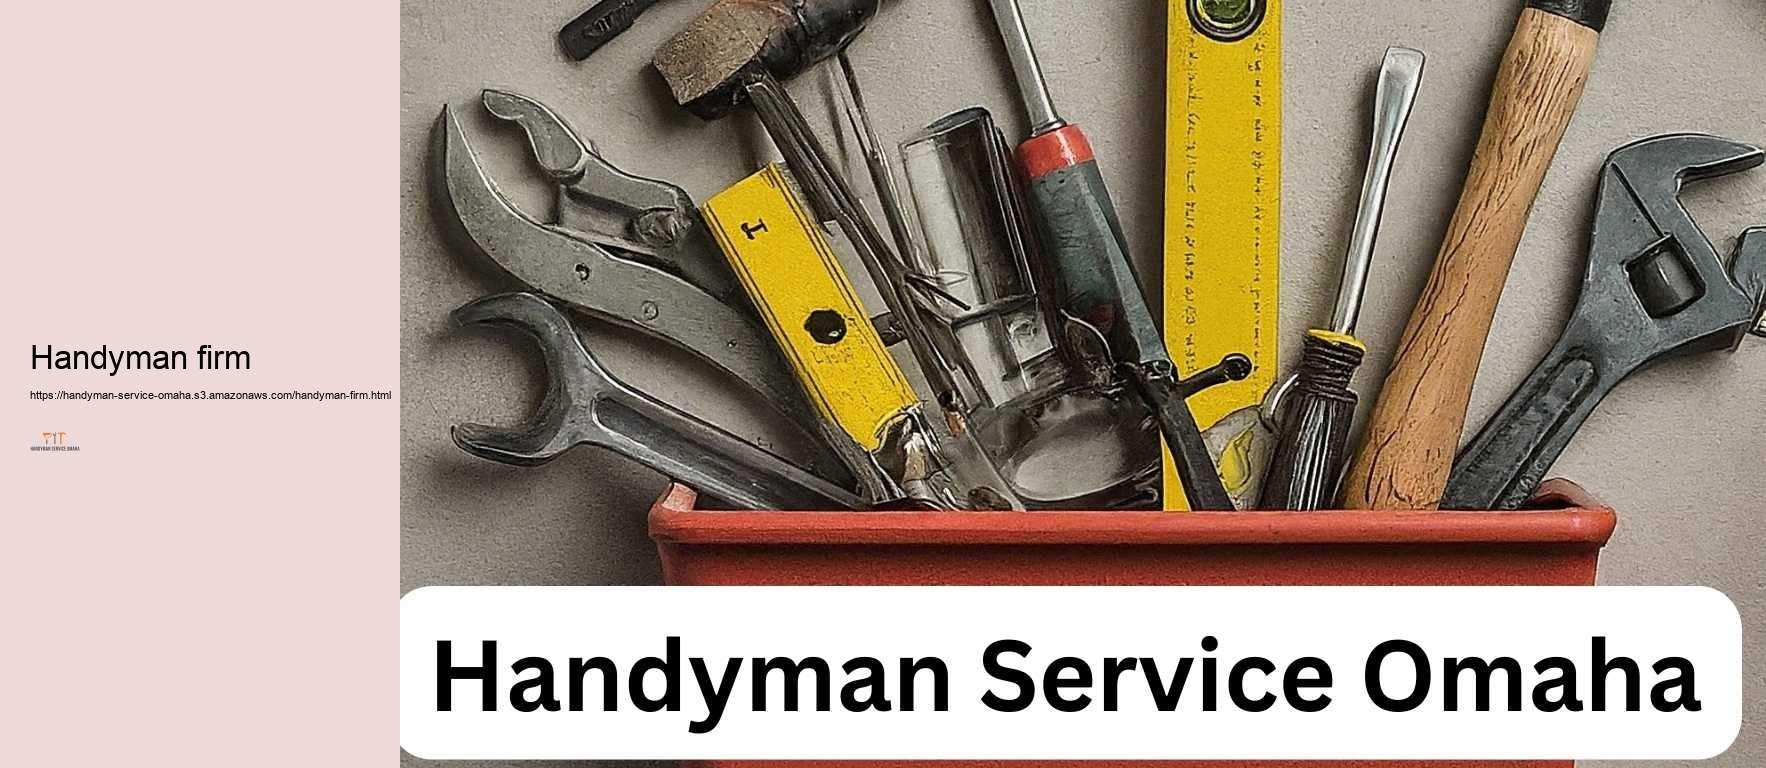 Handyman firm